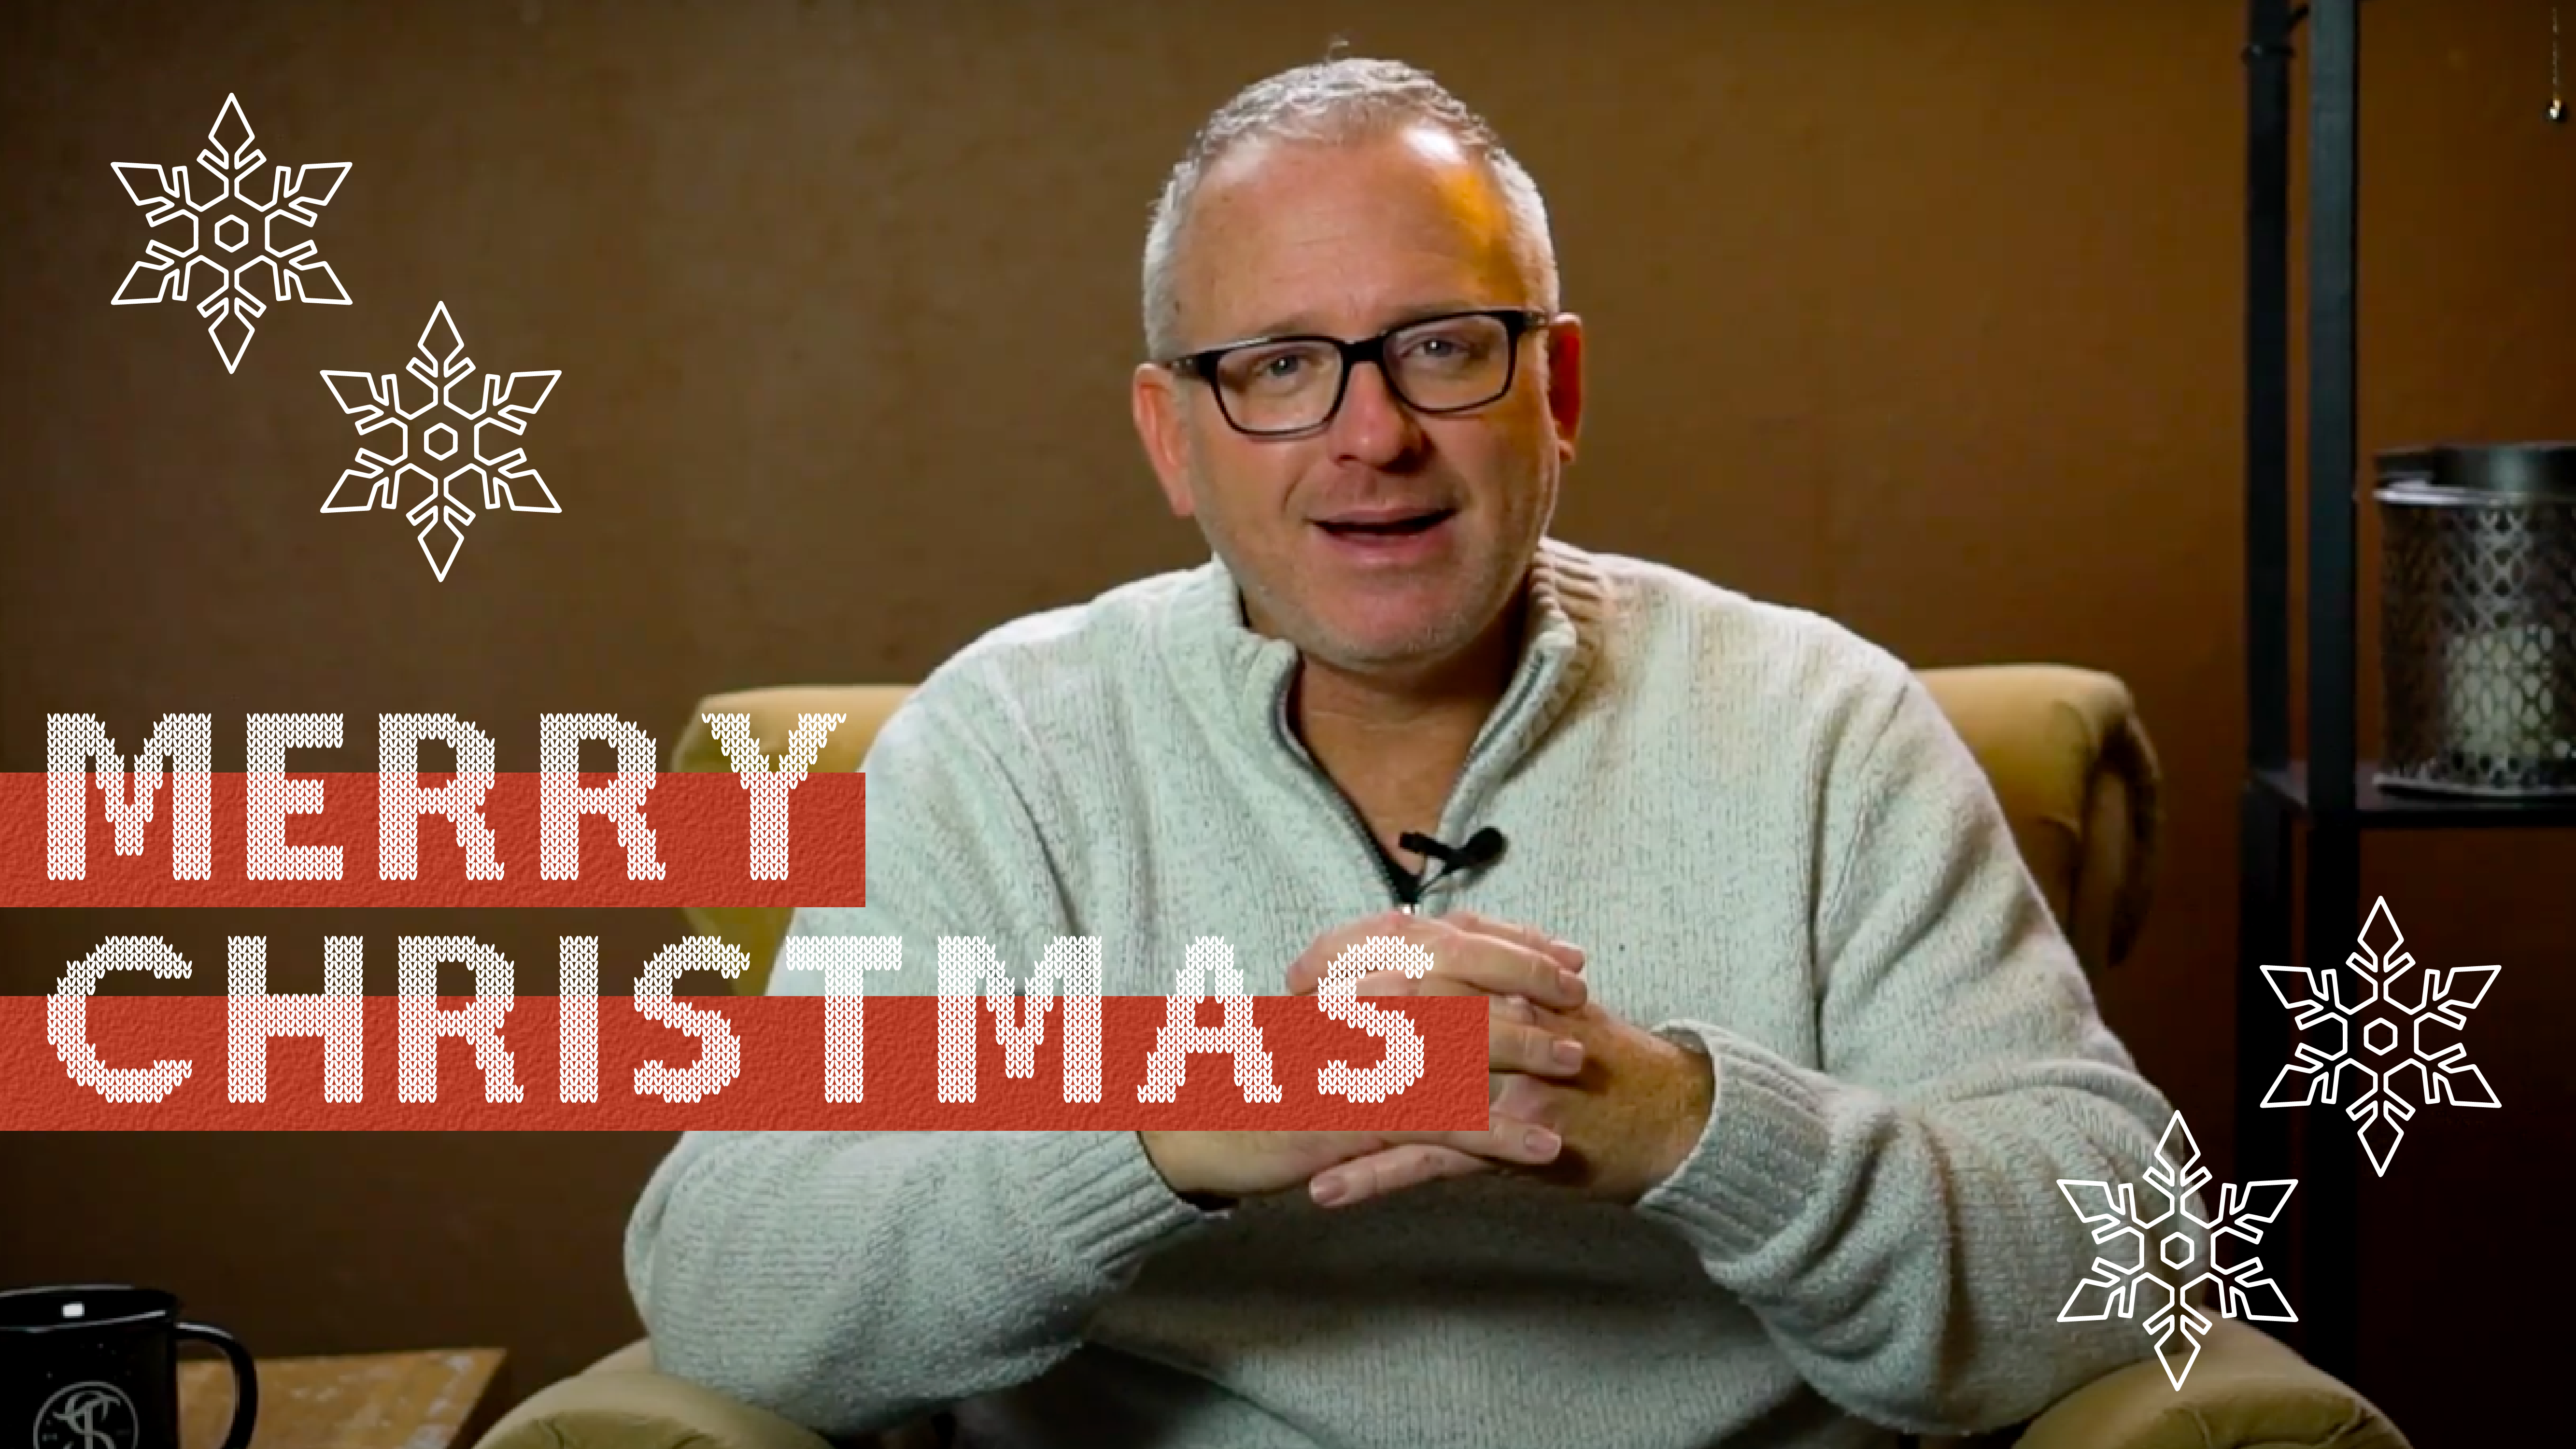 VIDEO: Merry Christmas 2020